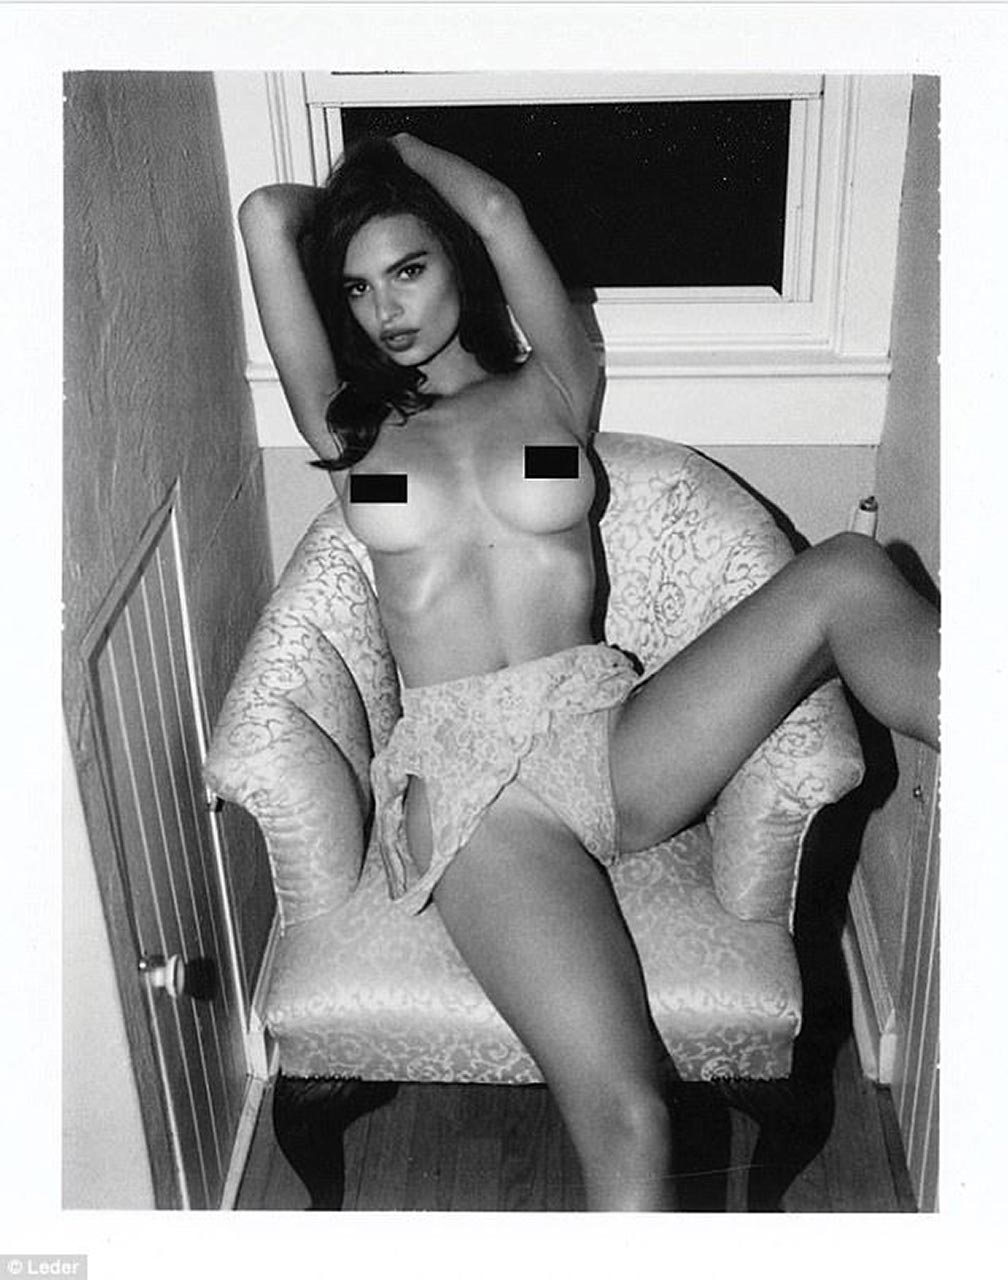 Sluty Model Emily Ratajkowski Nude Polaroid Photos